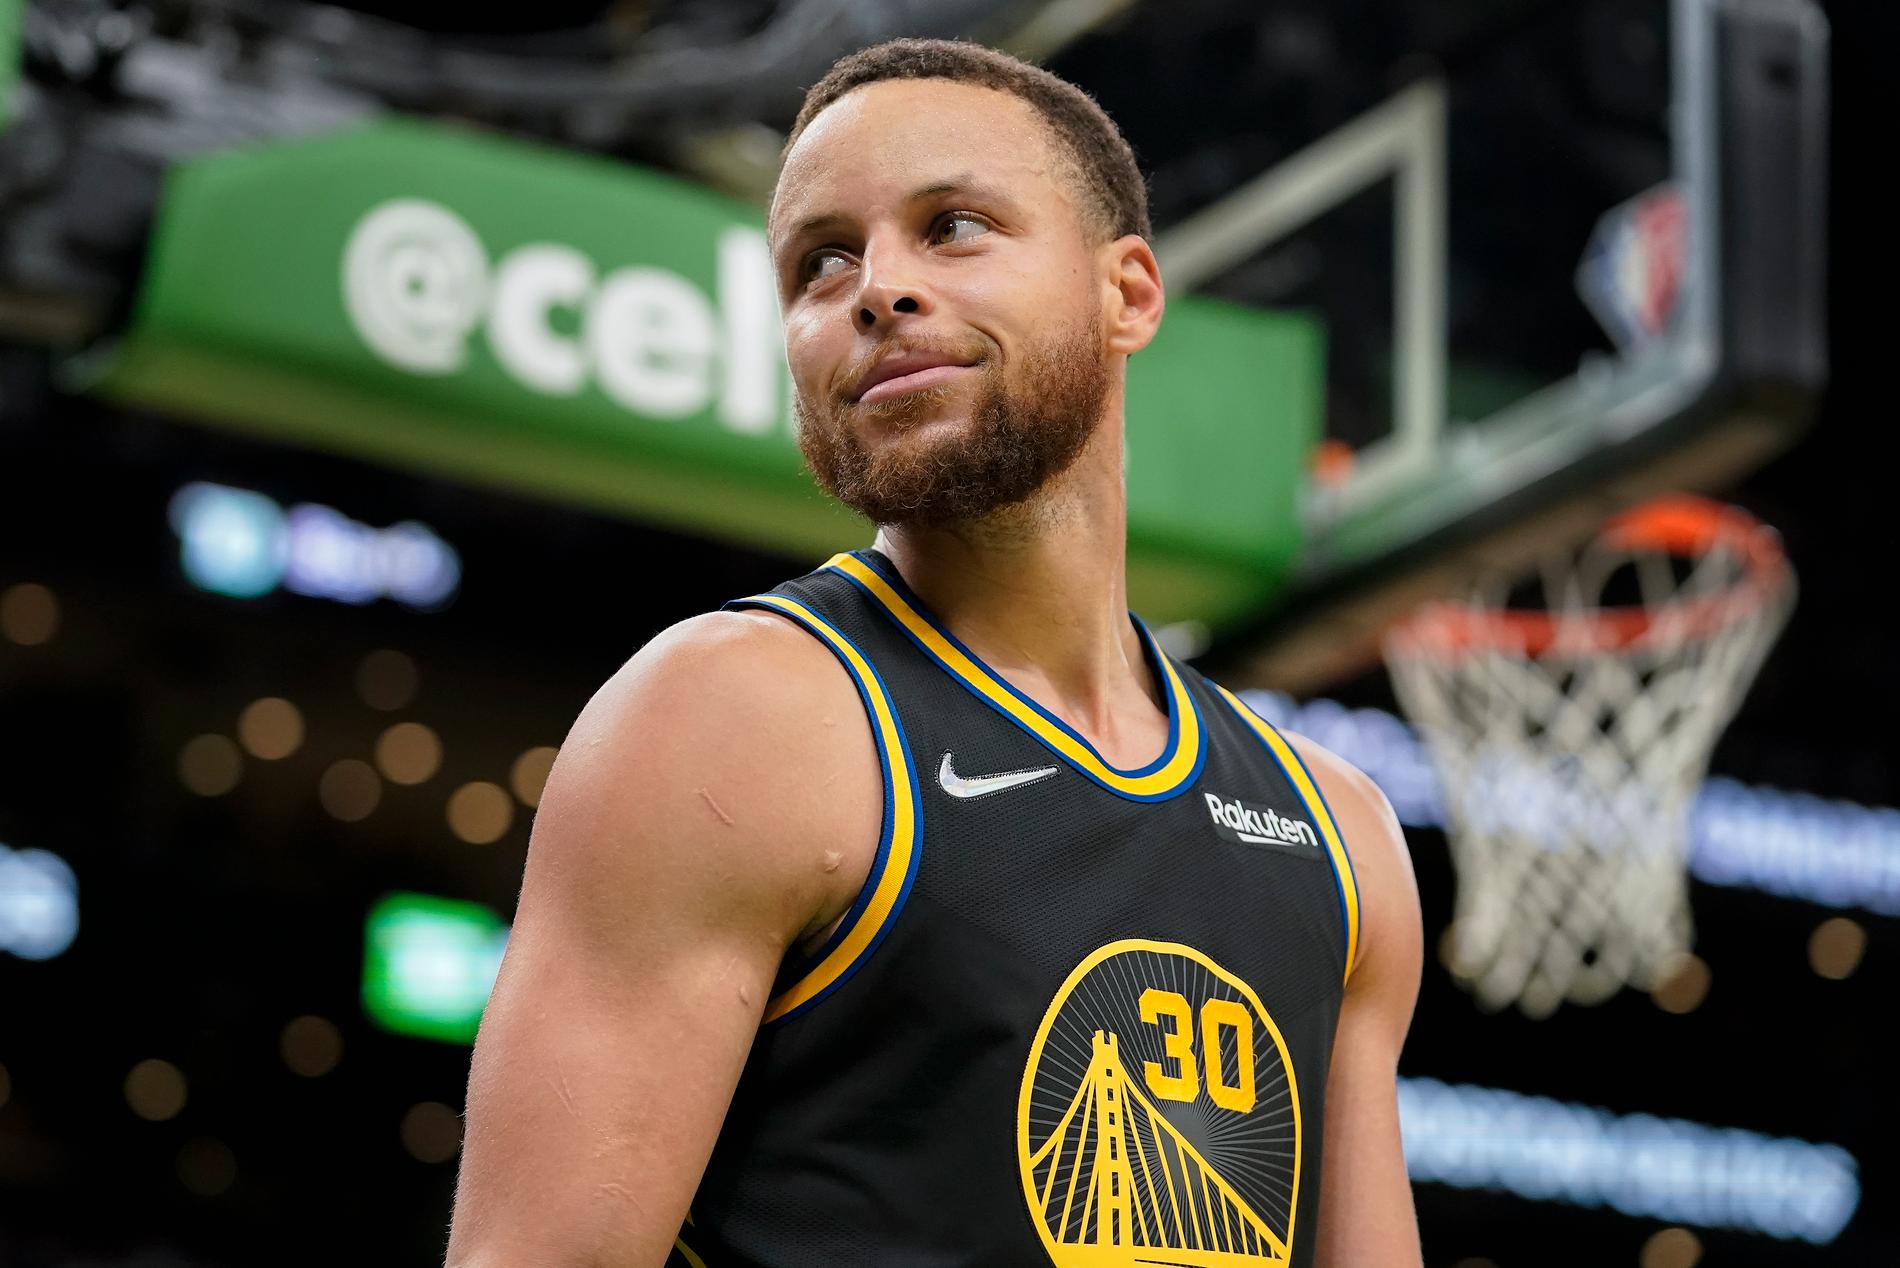 Golden State Warriors guard Stephen Curry gjorde flest poäng.